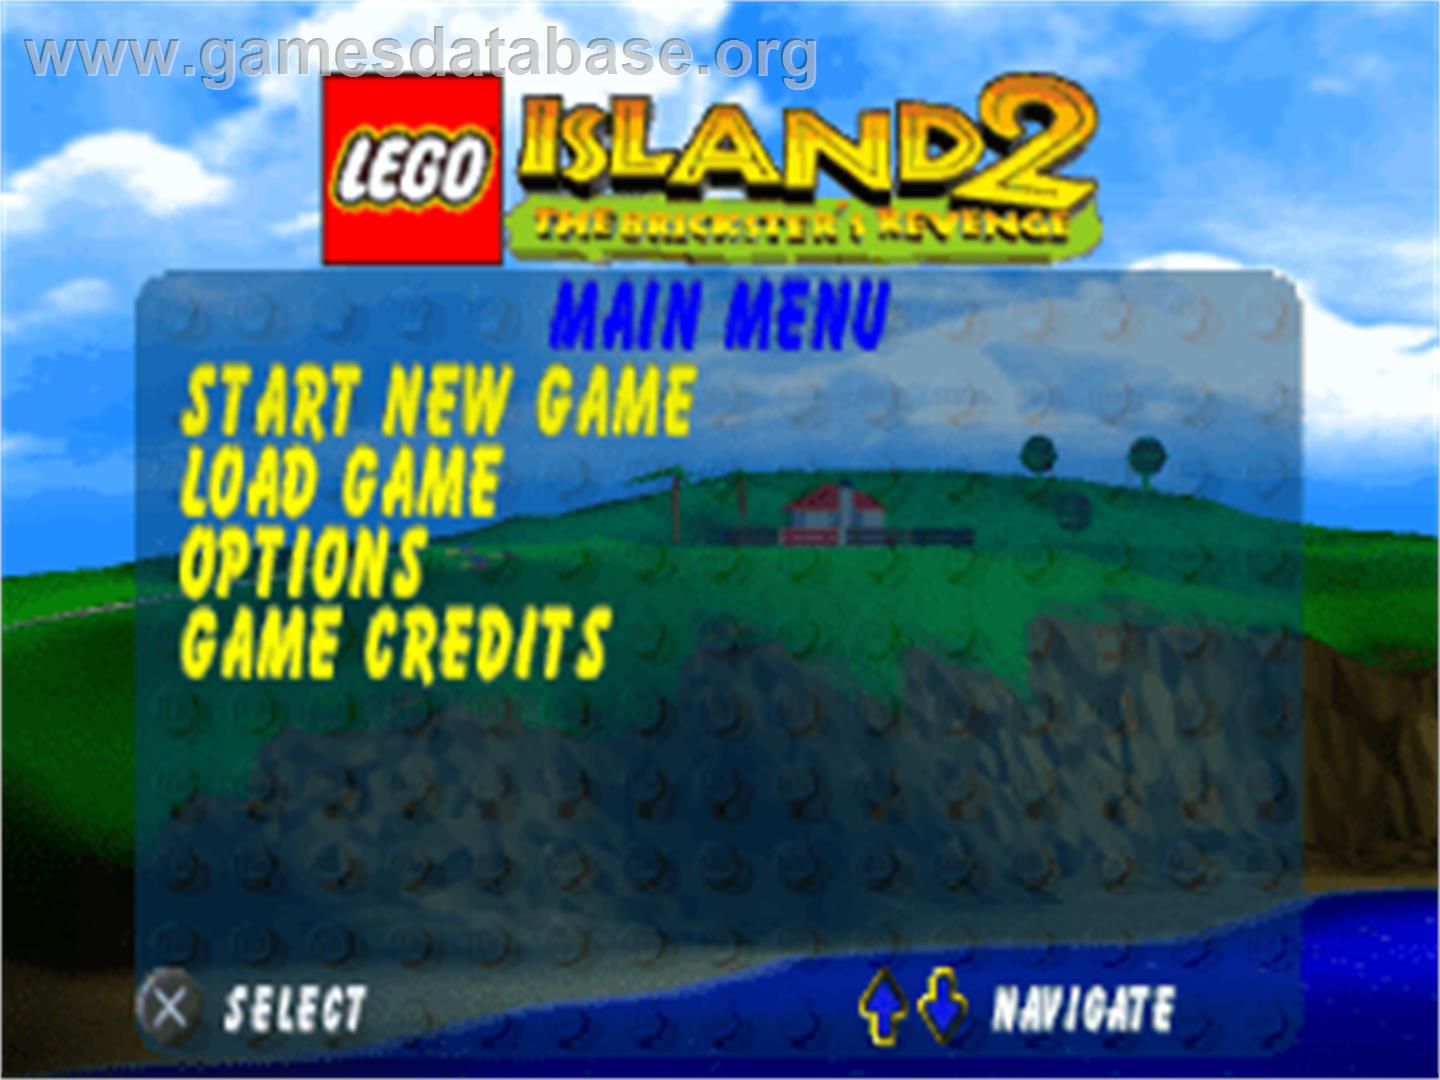 LEGO Island 2: The Brickster's Revenge - Sony Playstation - Artwork - Title Screen